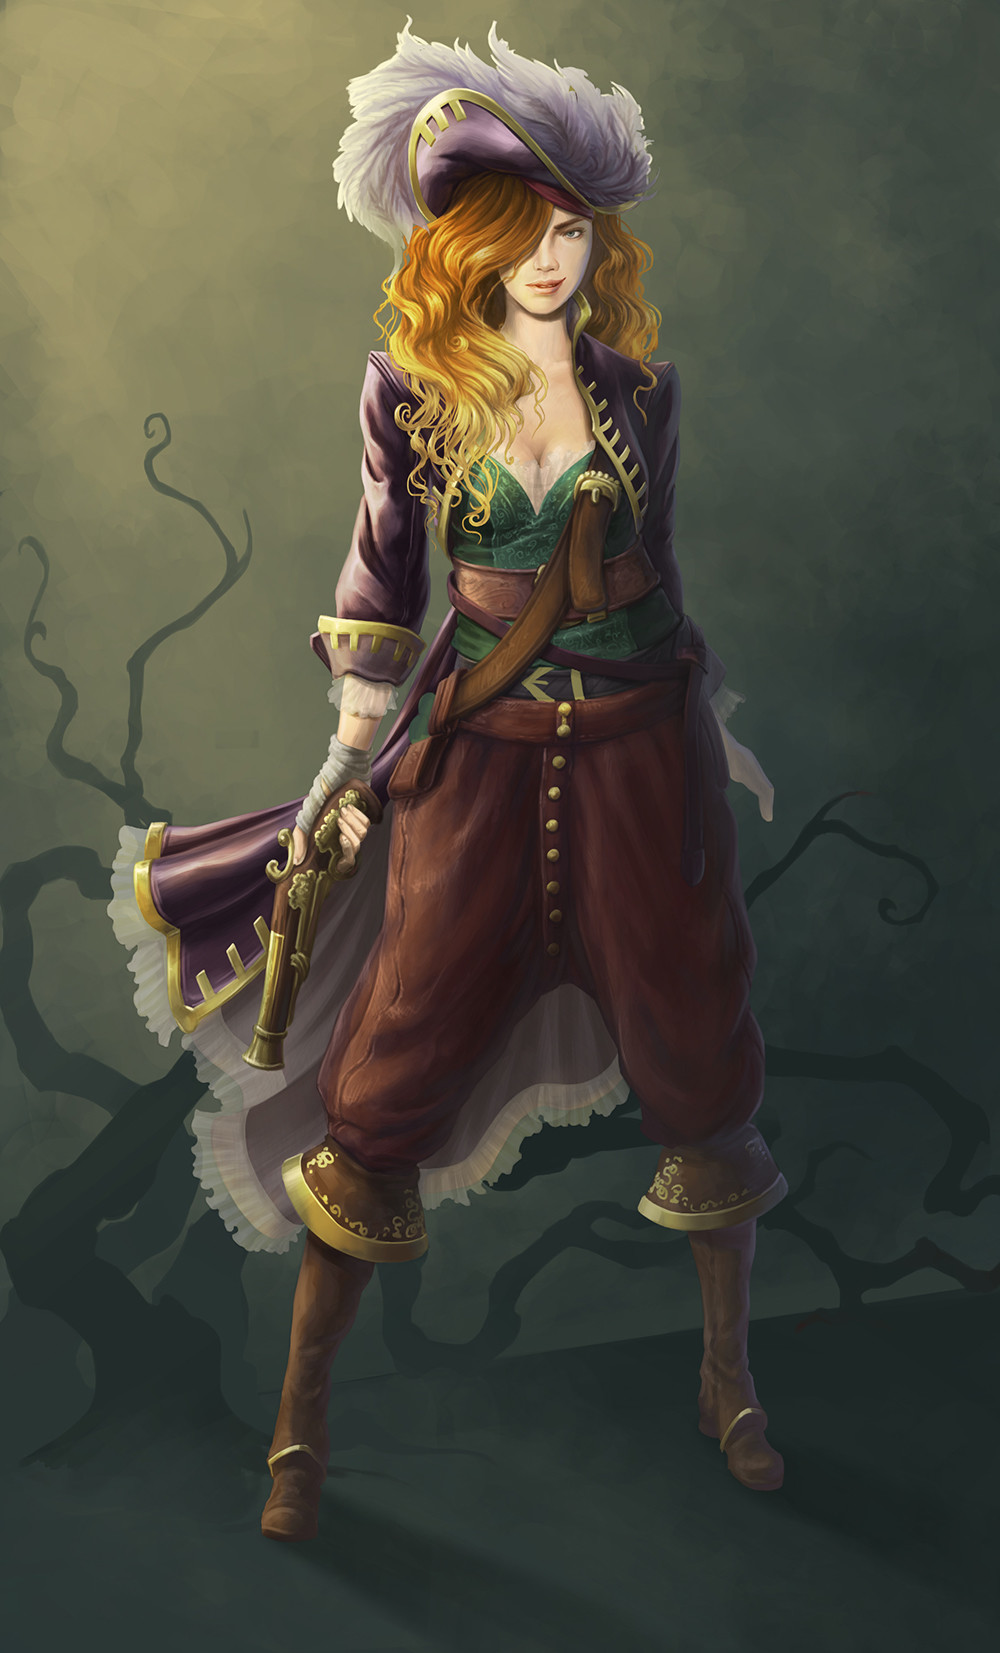 ArtStation - female pirate character, L H